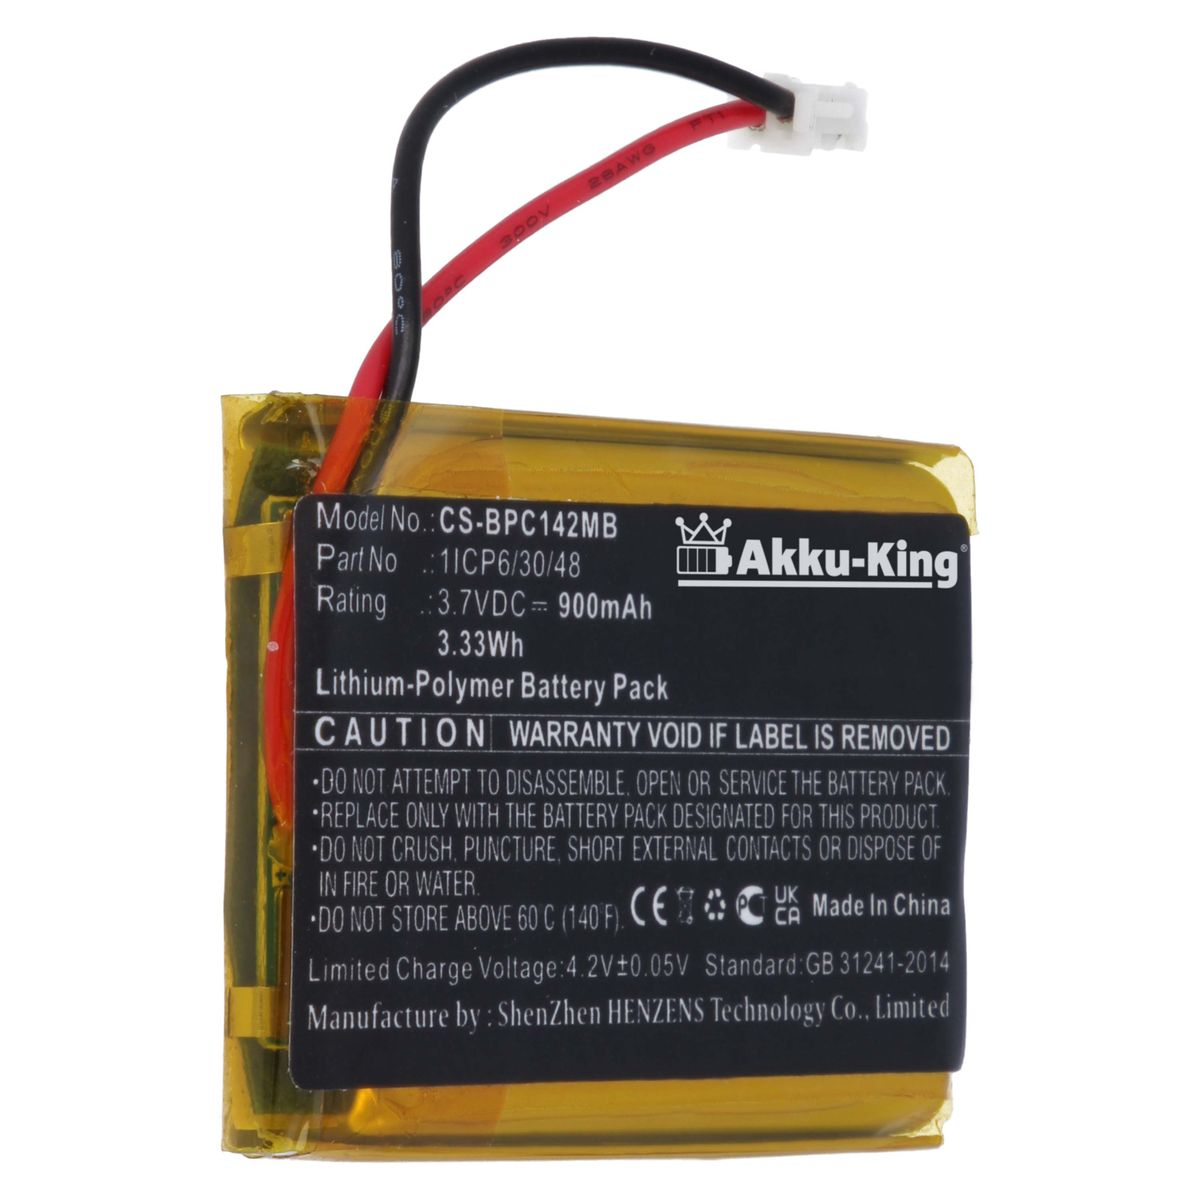 AKKU-KING Akku kompatibel mit Volt, Li-Polymer 900mAh 3.7 Babymoov Geräte-Akku, 1ICP6/30/48